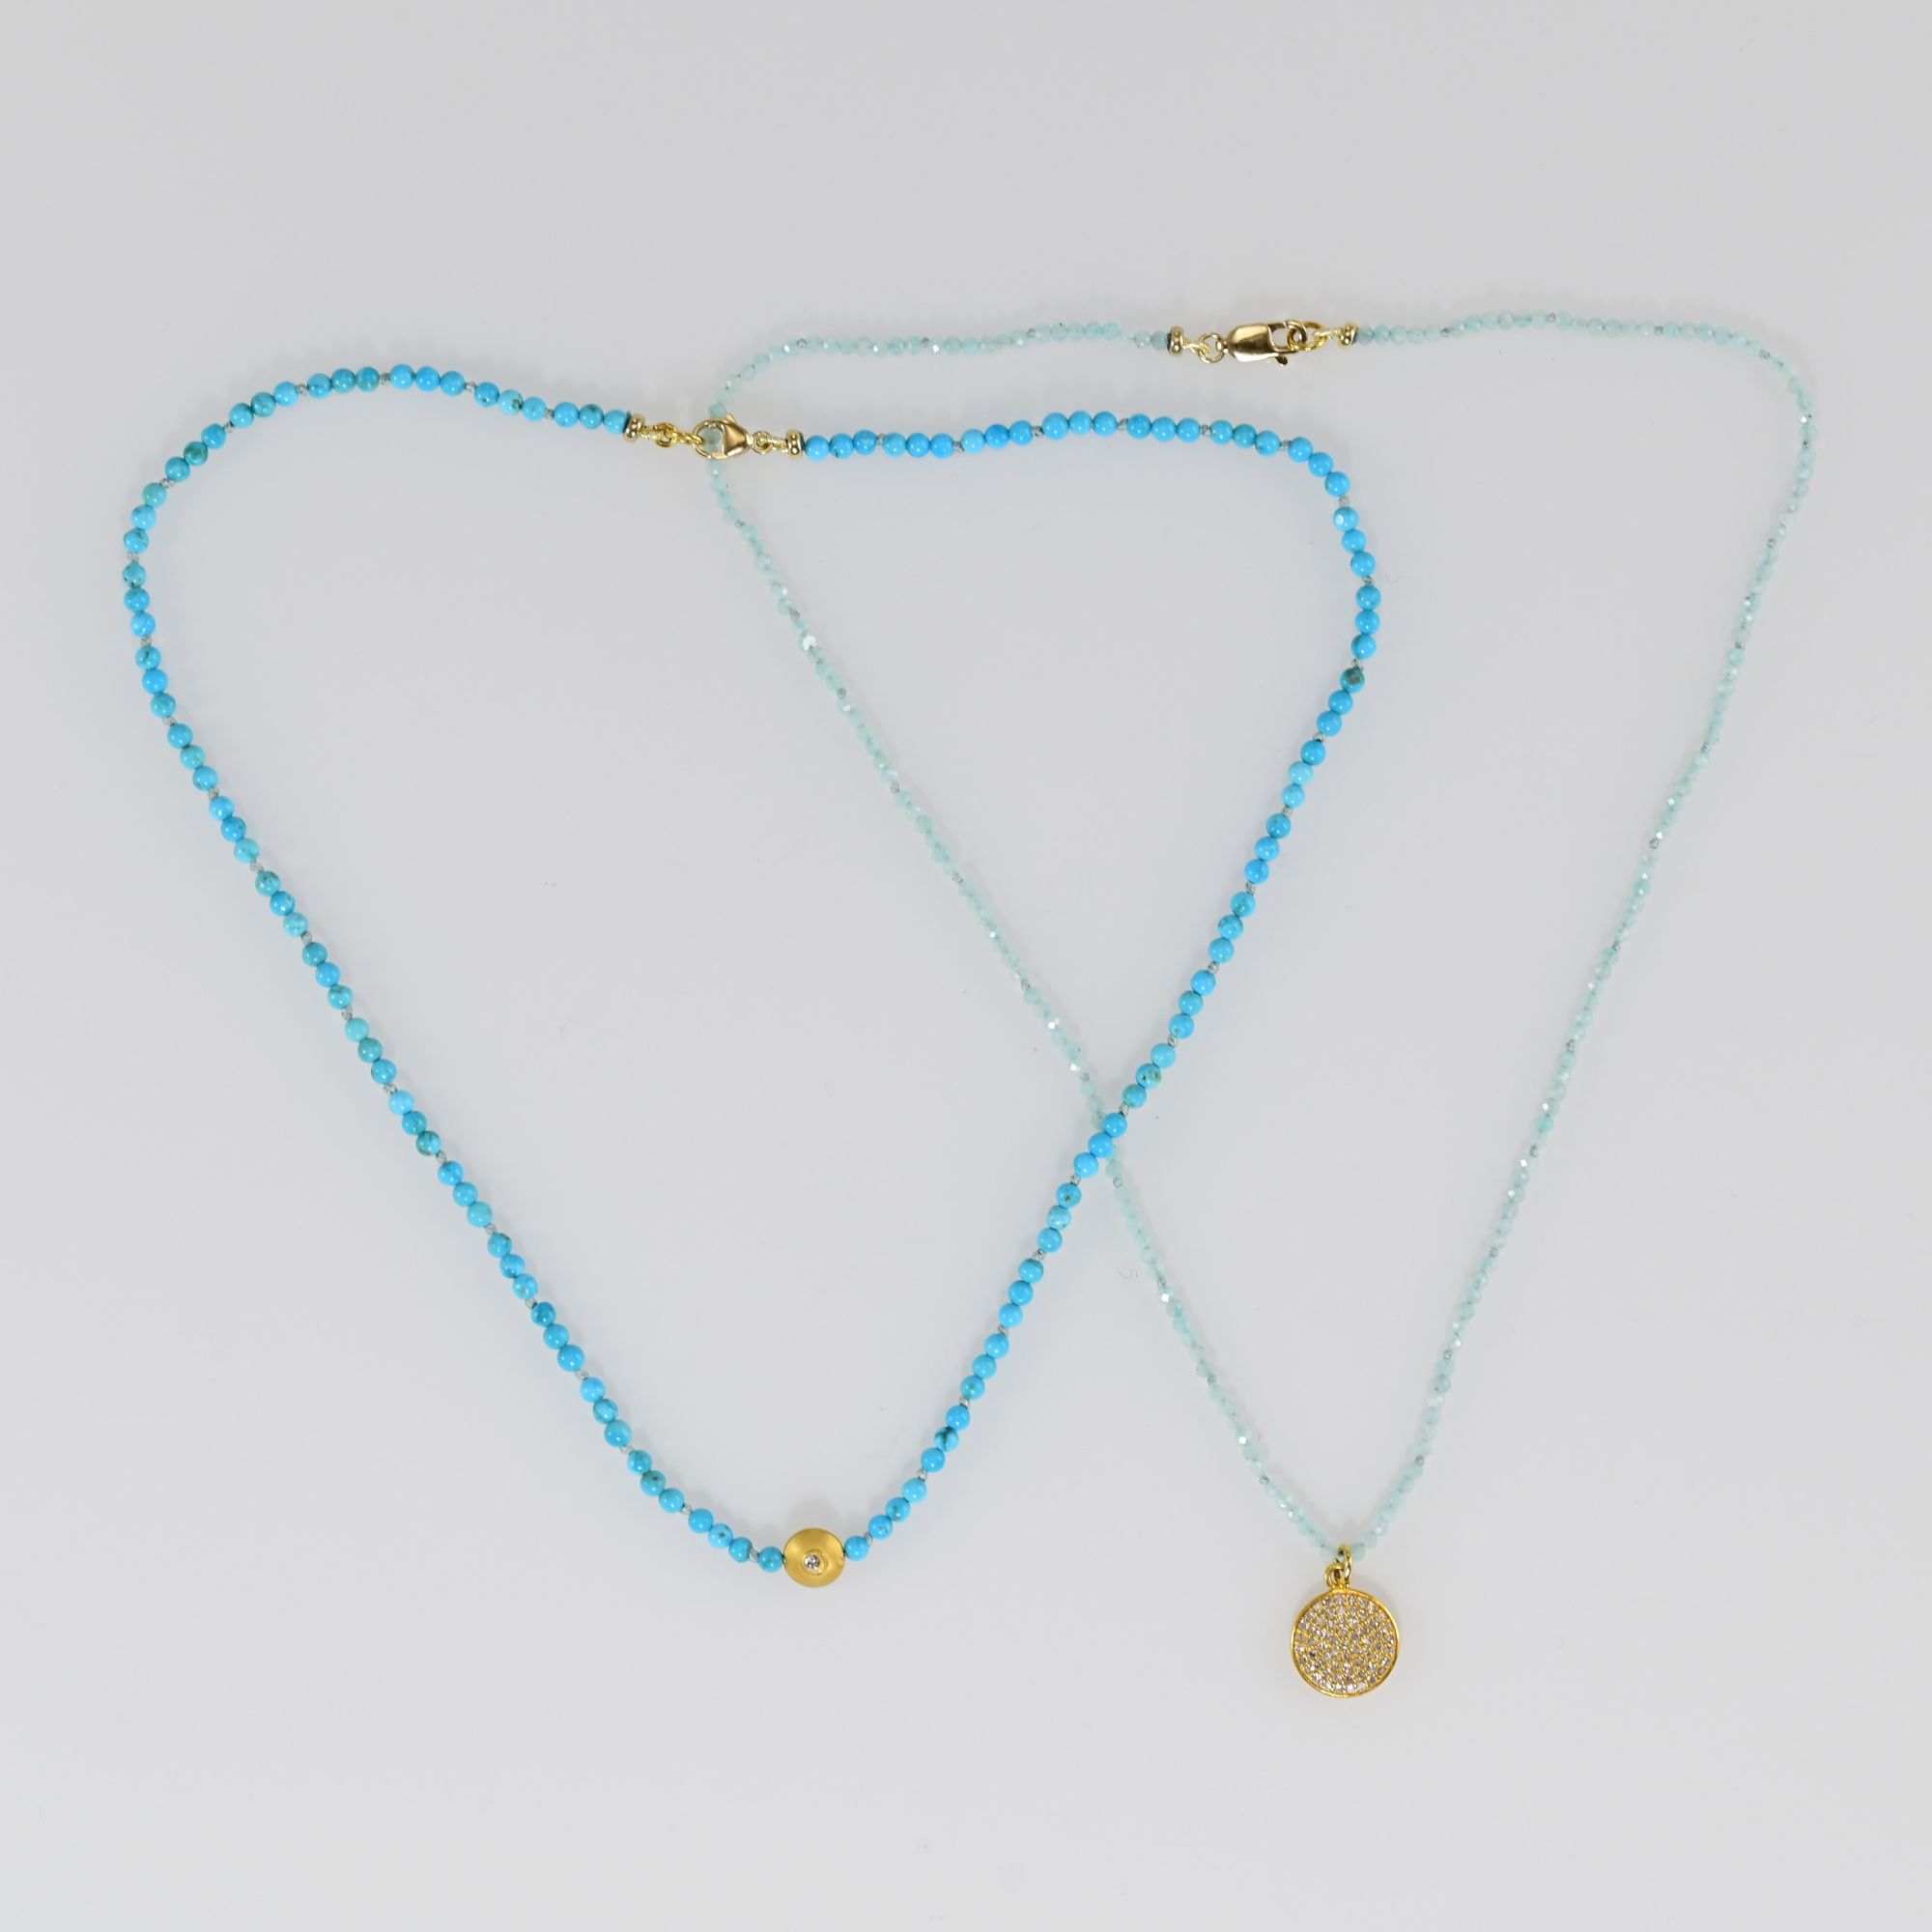 Delicate everyday wear necklace, Turquoise, Amazonite, 18k & Diamonds